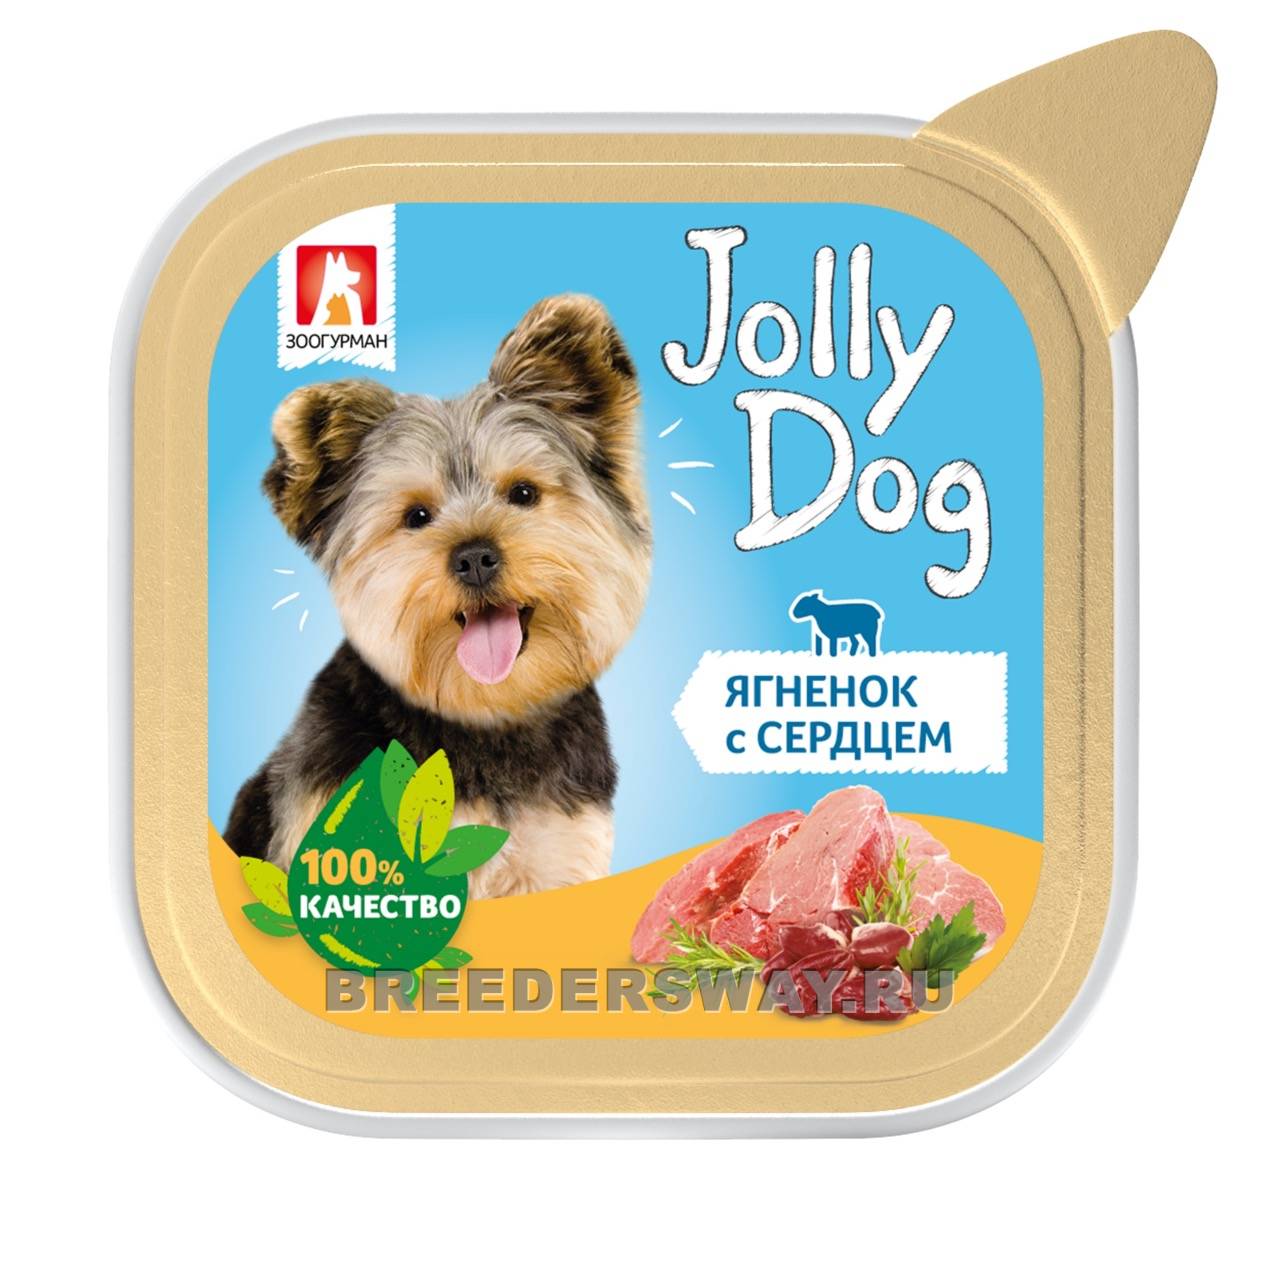 Jolly Dog Ягнёнок с сердцем д/собак ламистер 100гр